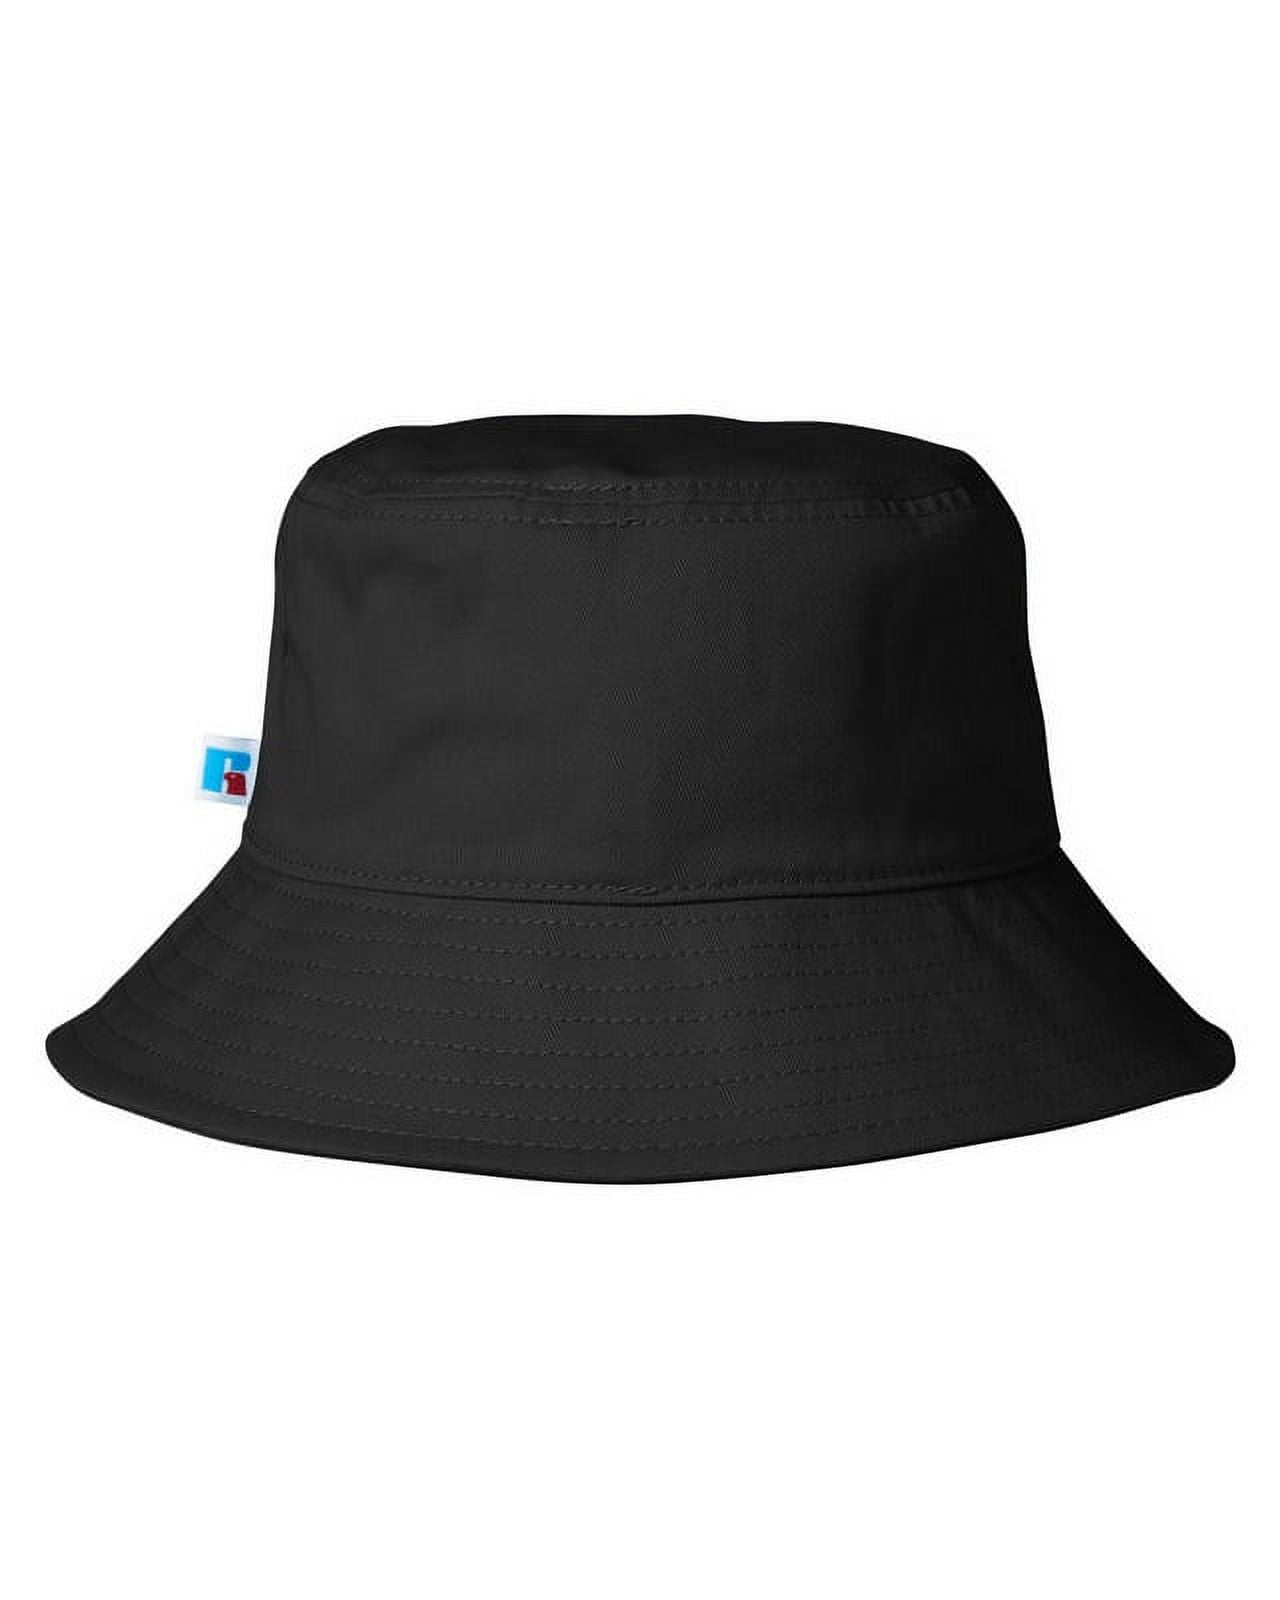 Russell Athletic UB88UHU Core Bucket Hat-Black - Walmart.com